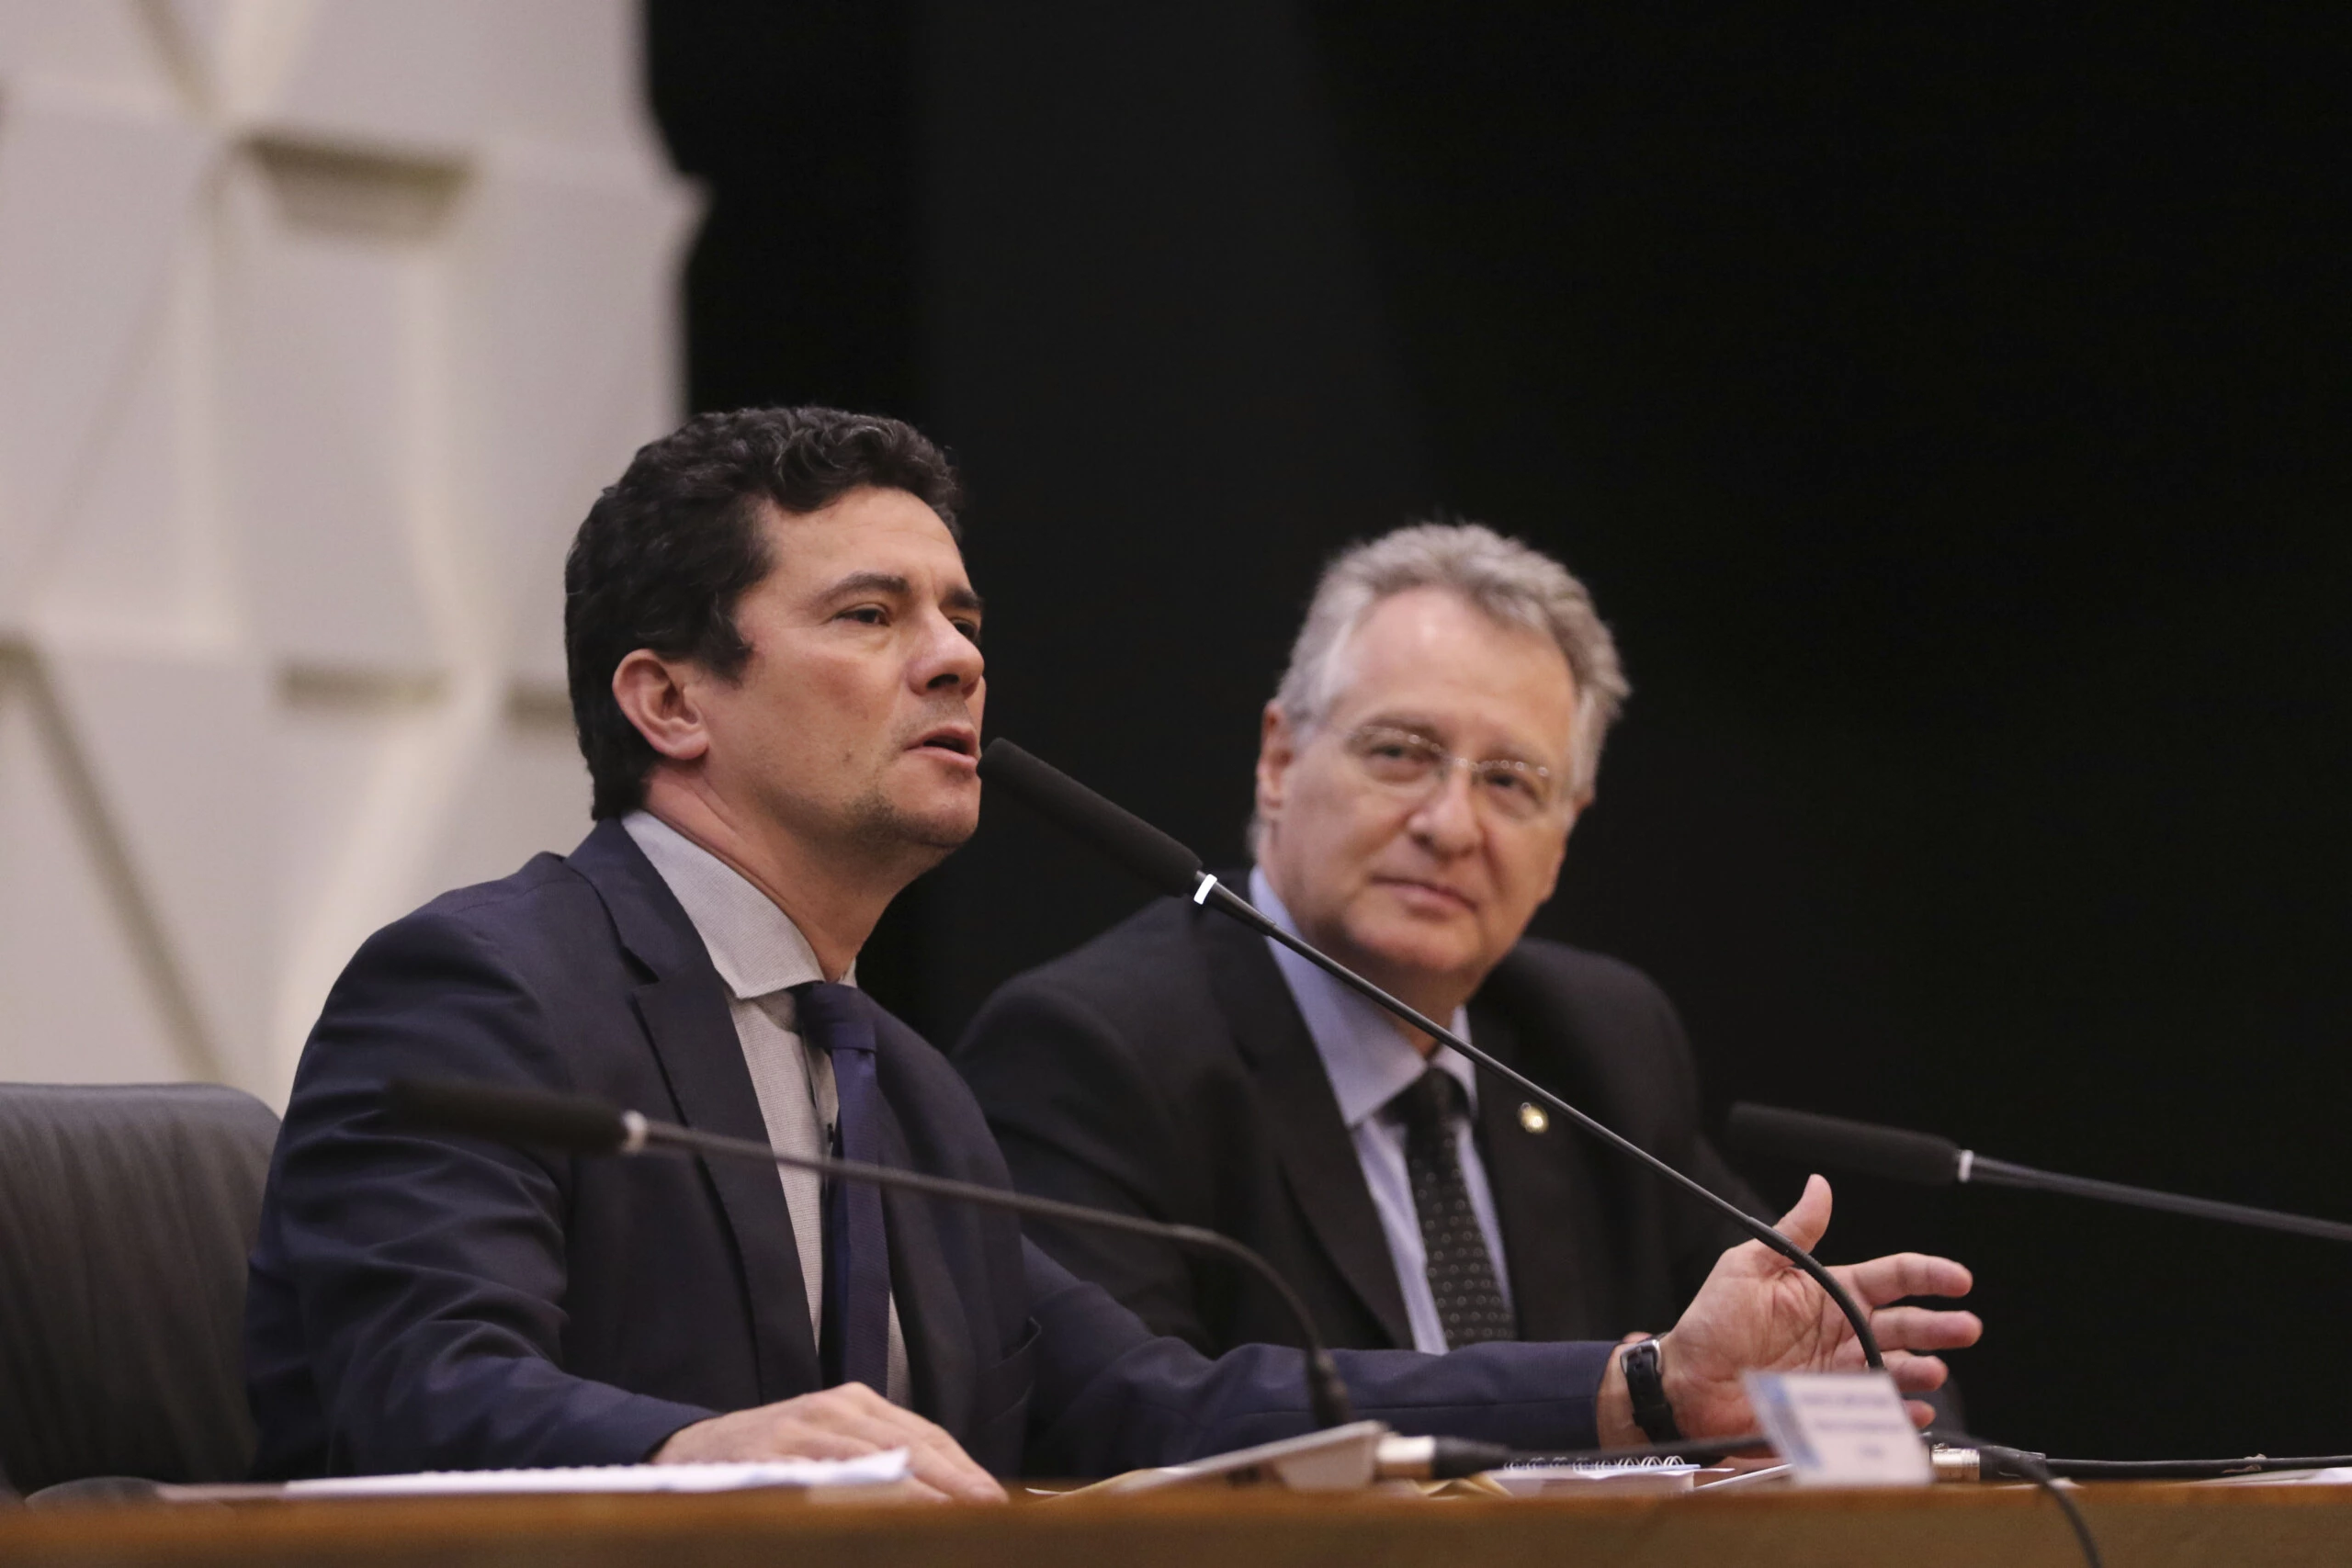 O ministro da Justiça e Segurança Pública, Sergio Moro, e o presidente do Conselho de Controle de Atividades Financeiras (Coaf), Roberto Leonel, participam da solenidade de entrega do Diploma de Mérito Coaf.